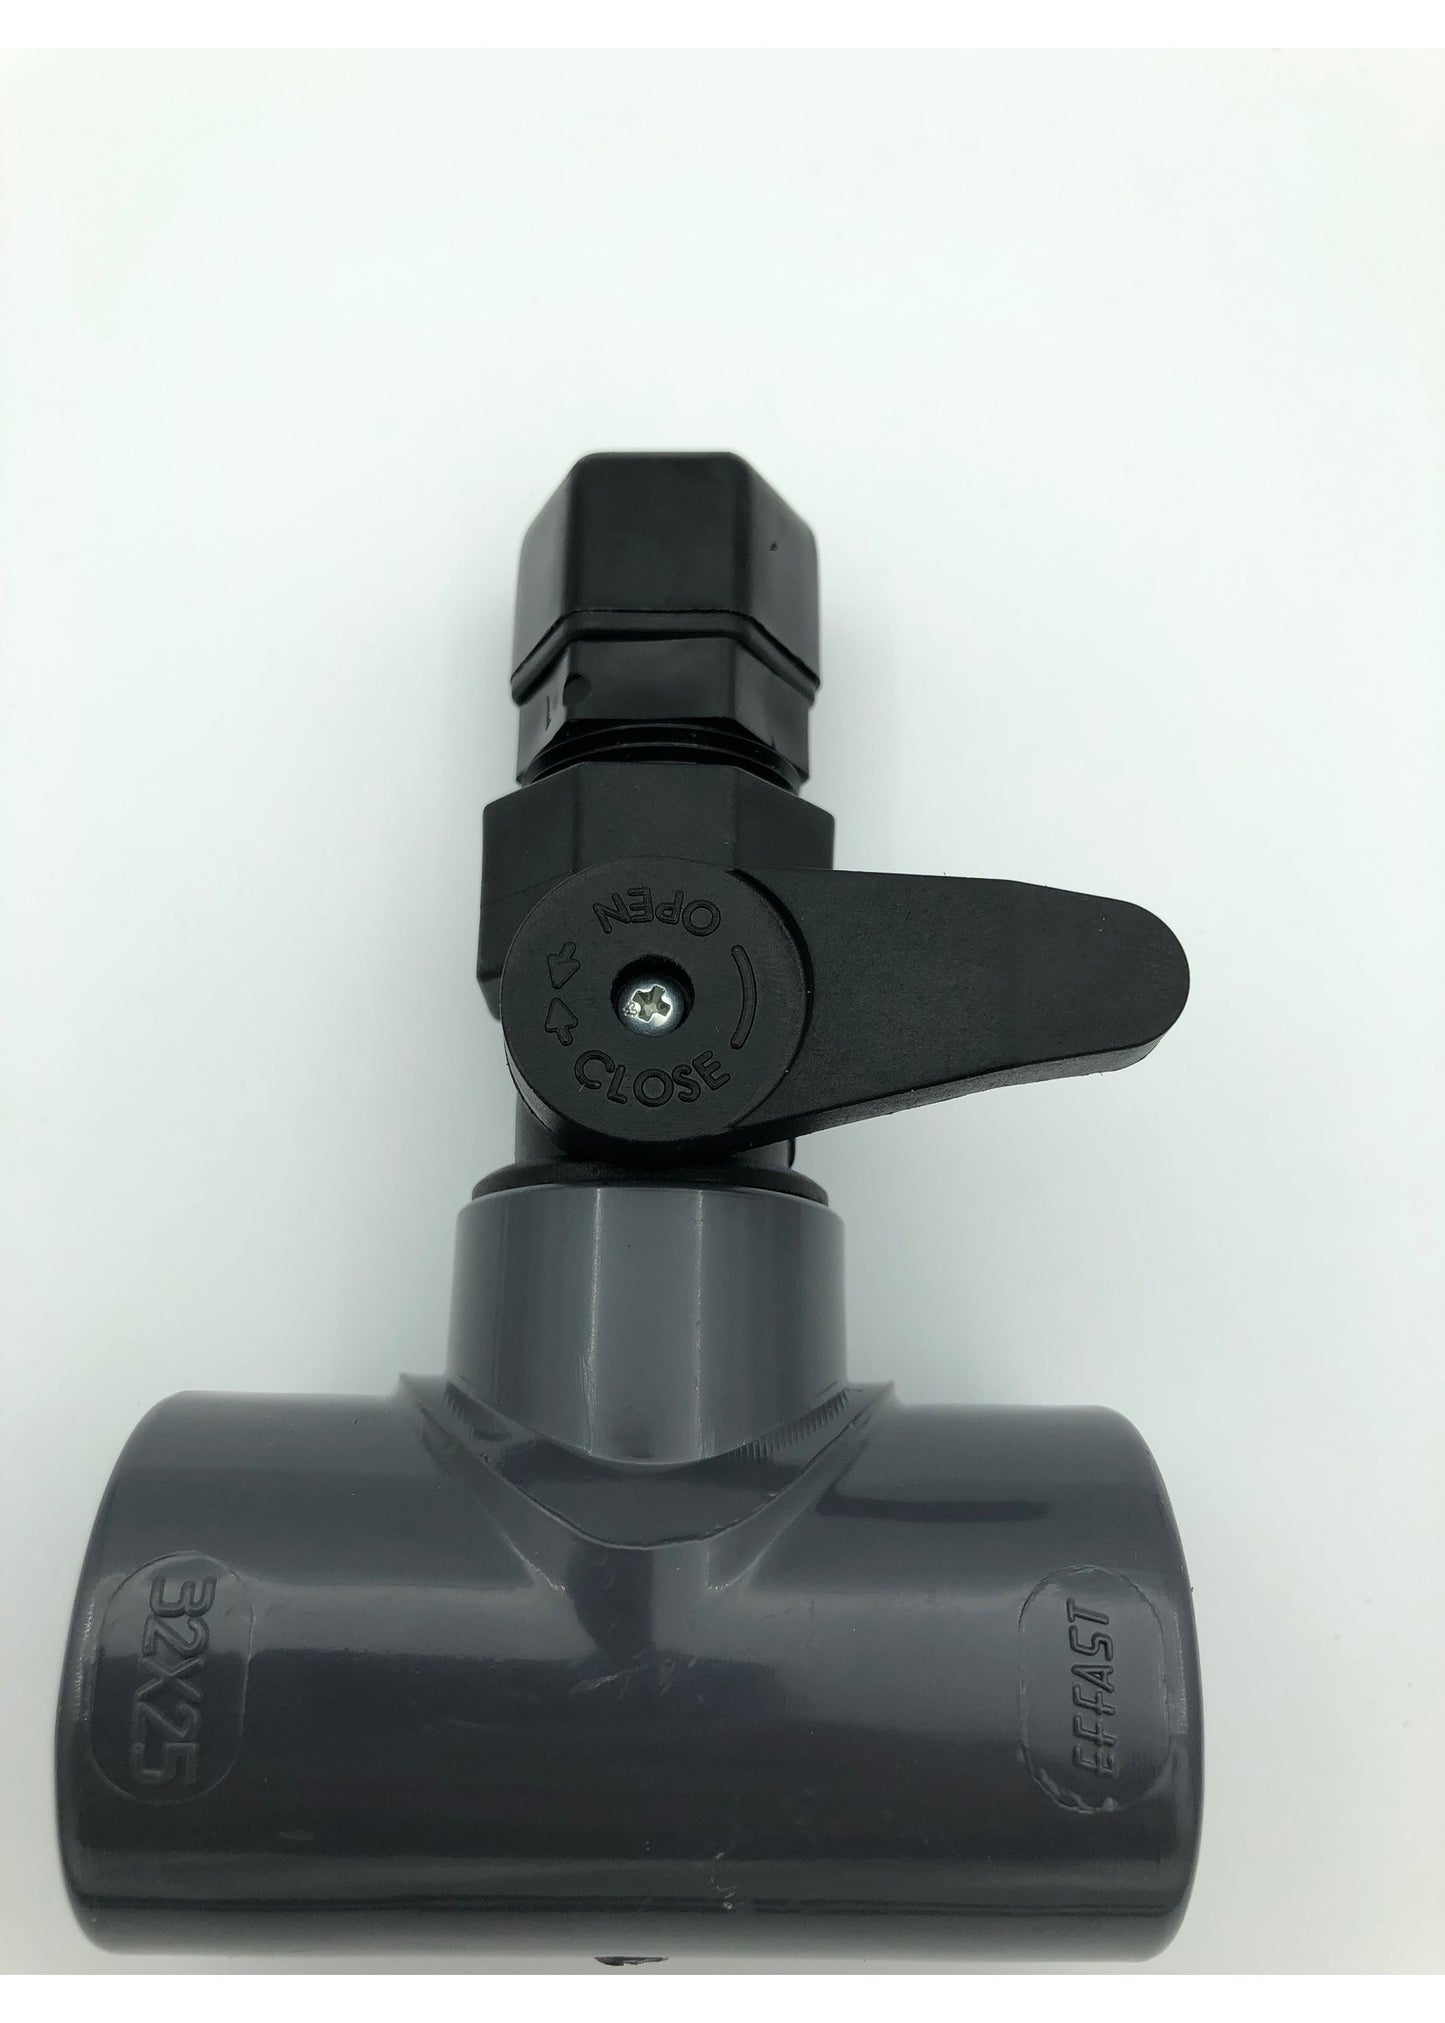 Probe valve 3/4 inch